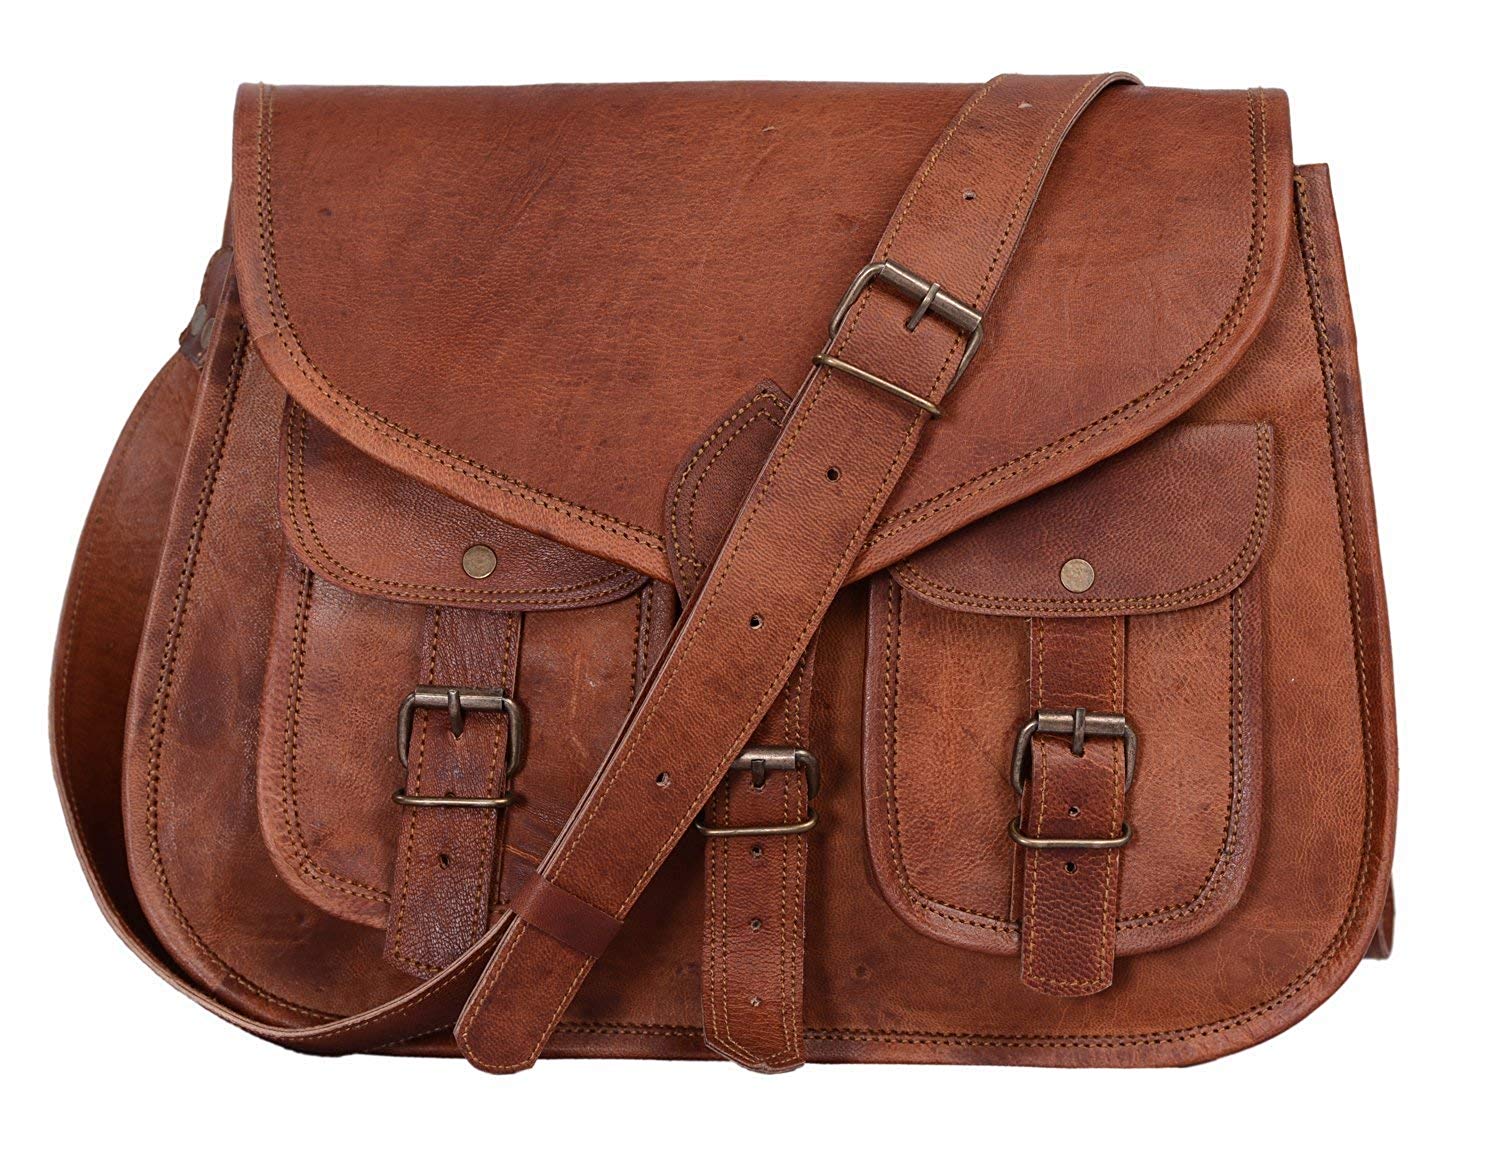 ON SALE! Genuine Leather Bag Strap - 1/2